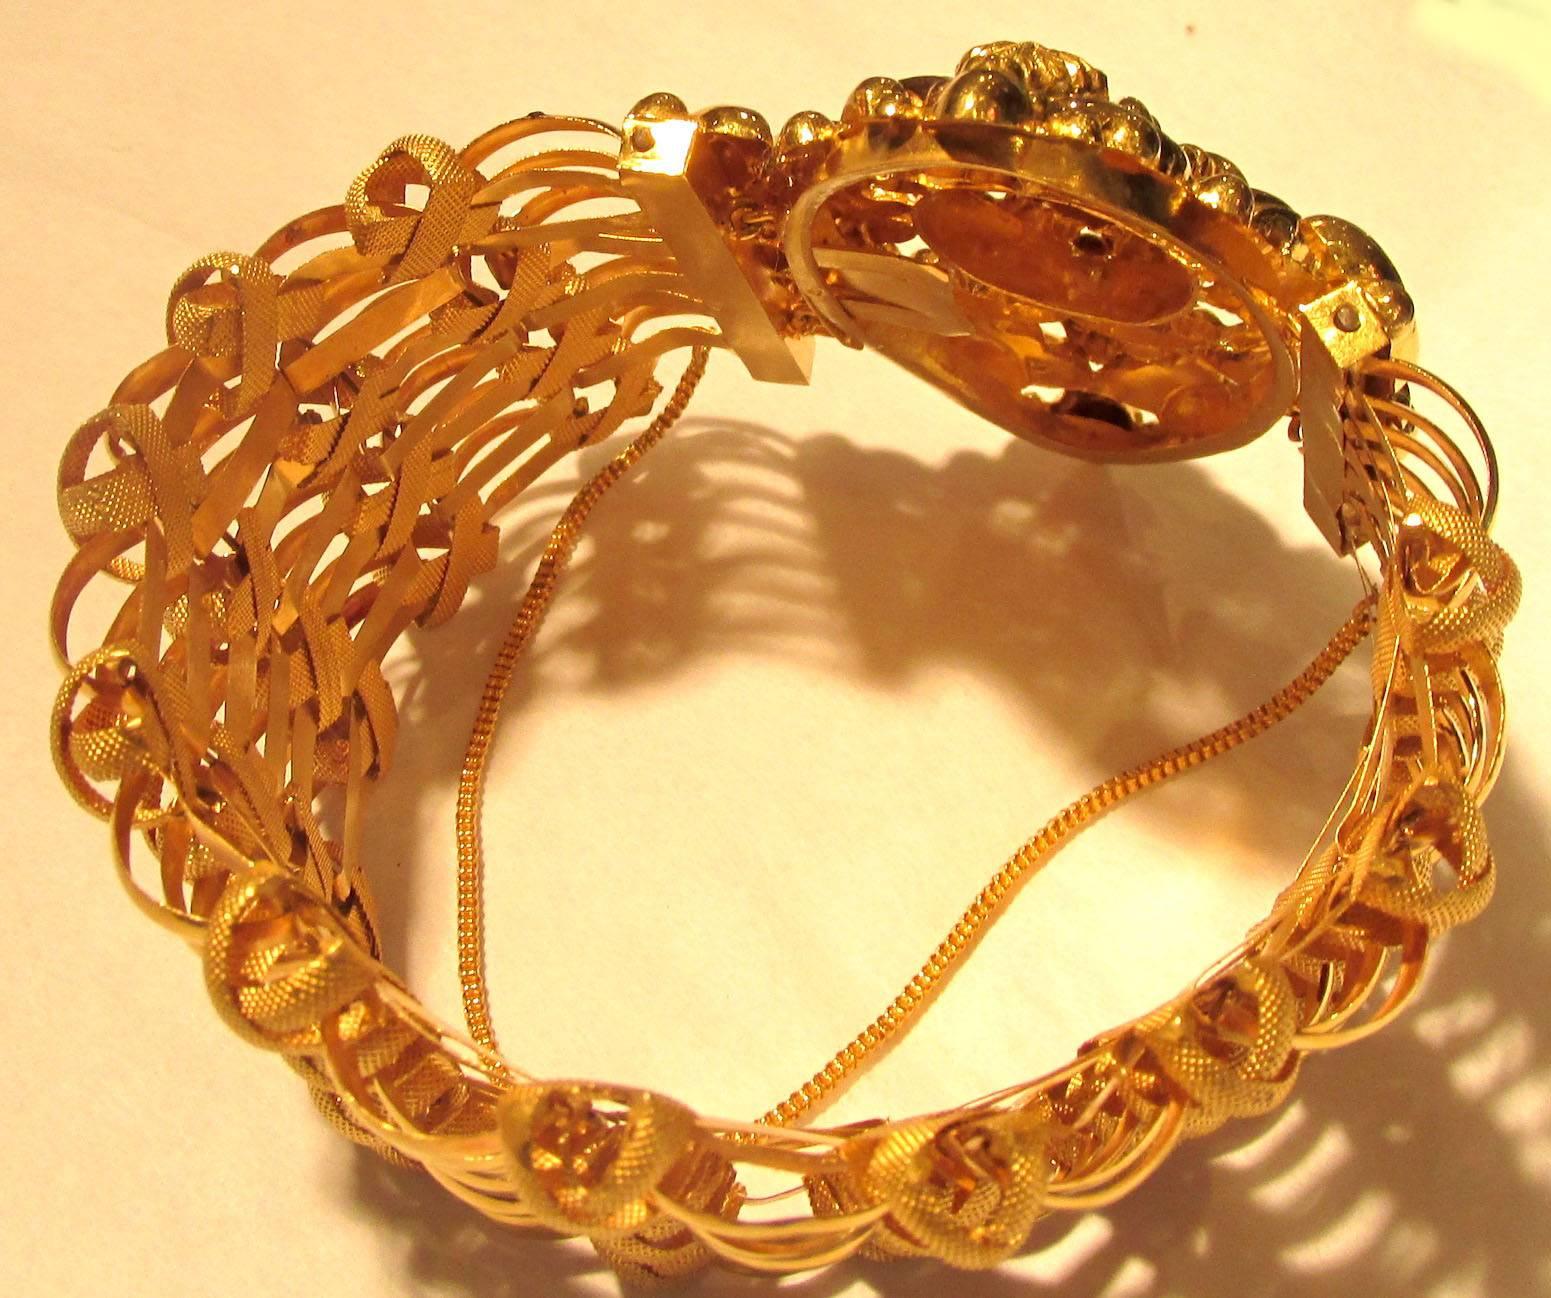 Antique French 18K Gold Cuff Bracelet, c1800bv For Sale 1